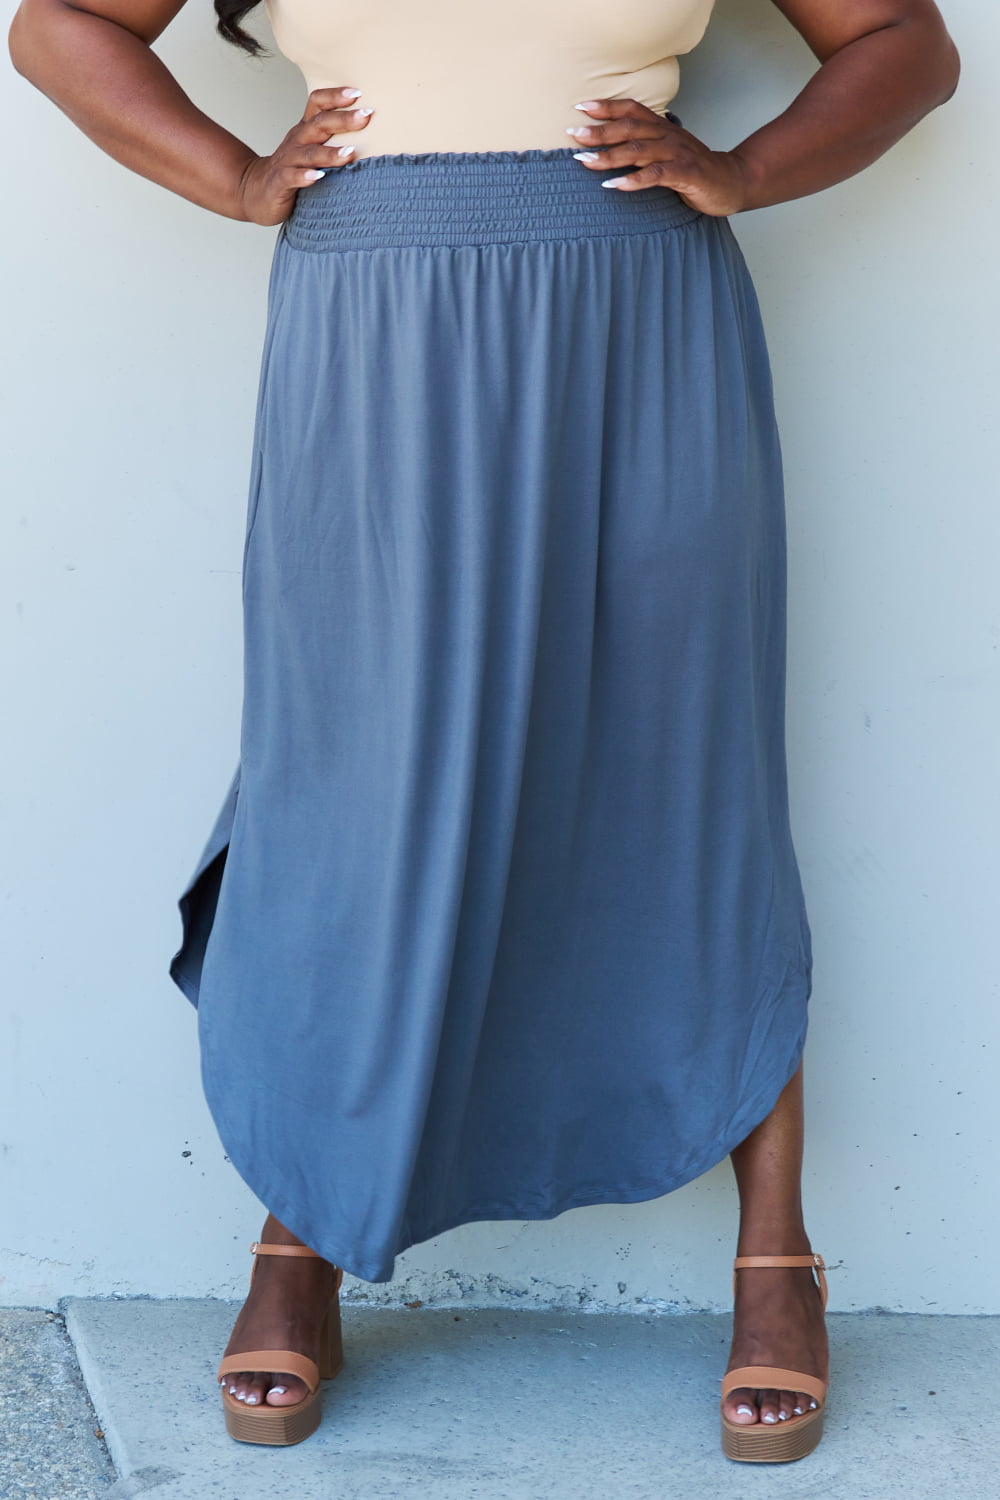 Doublju Comfort Princess Full Size High Waist Scoop Hem Maxi Skirt in Dusty Blue - nailedmoms